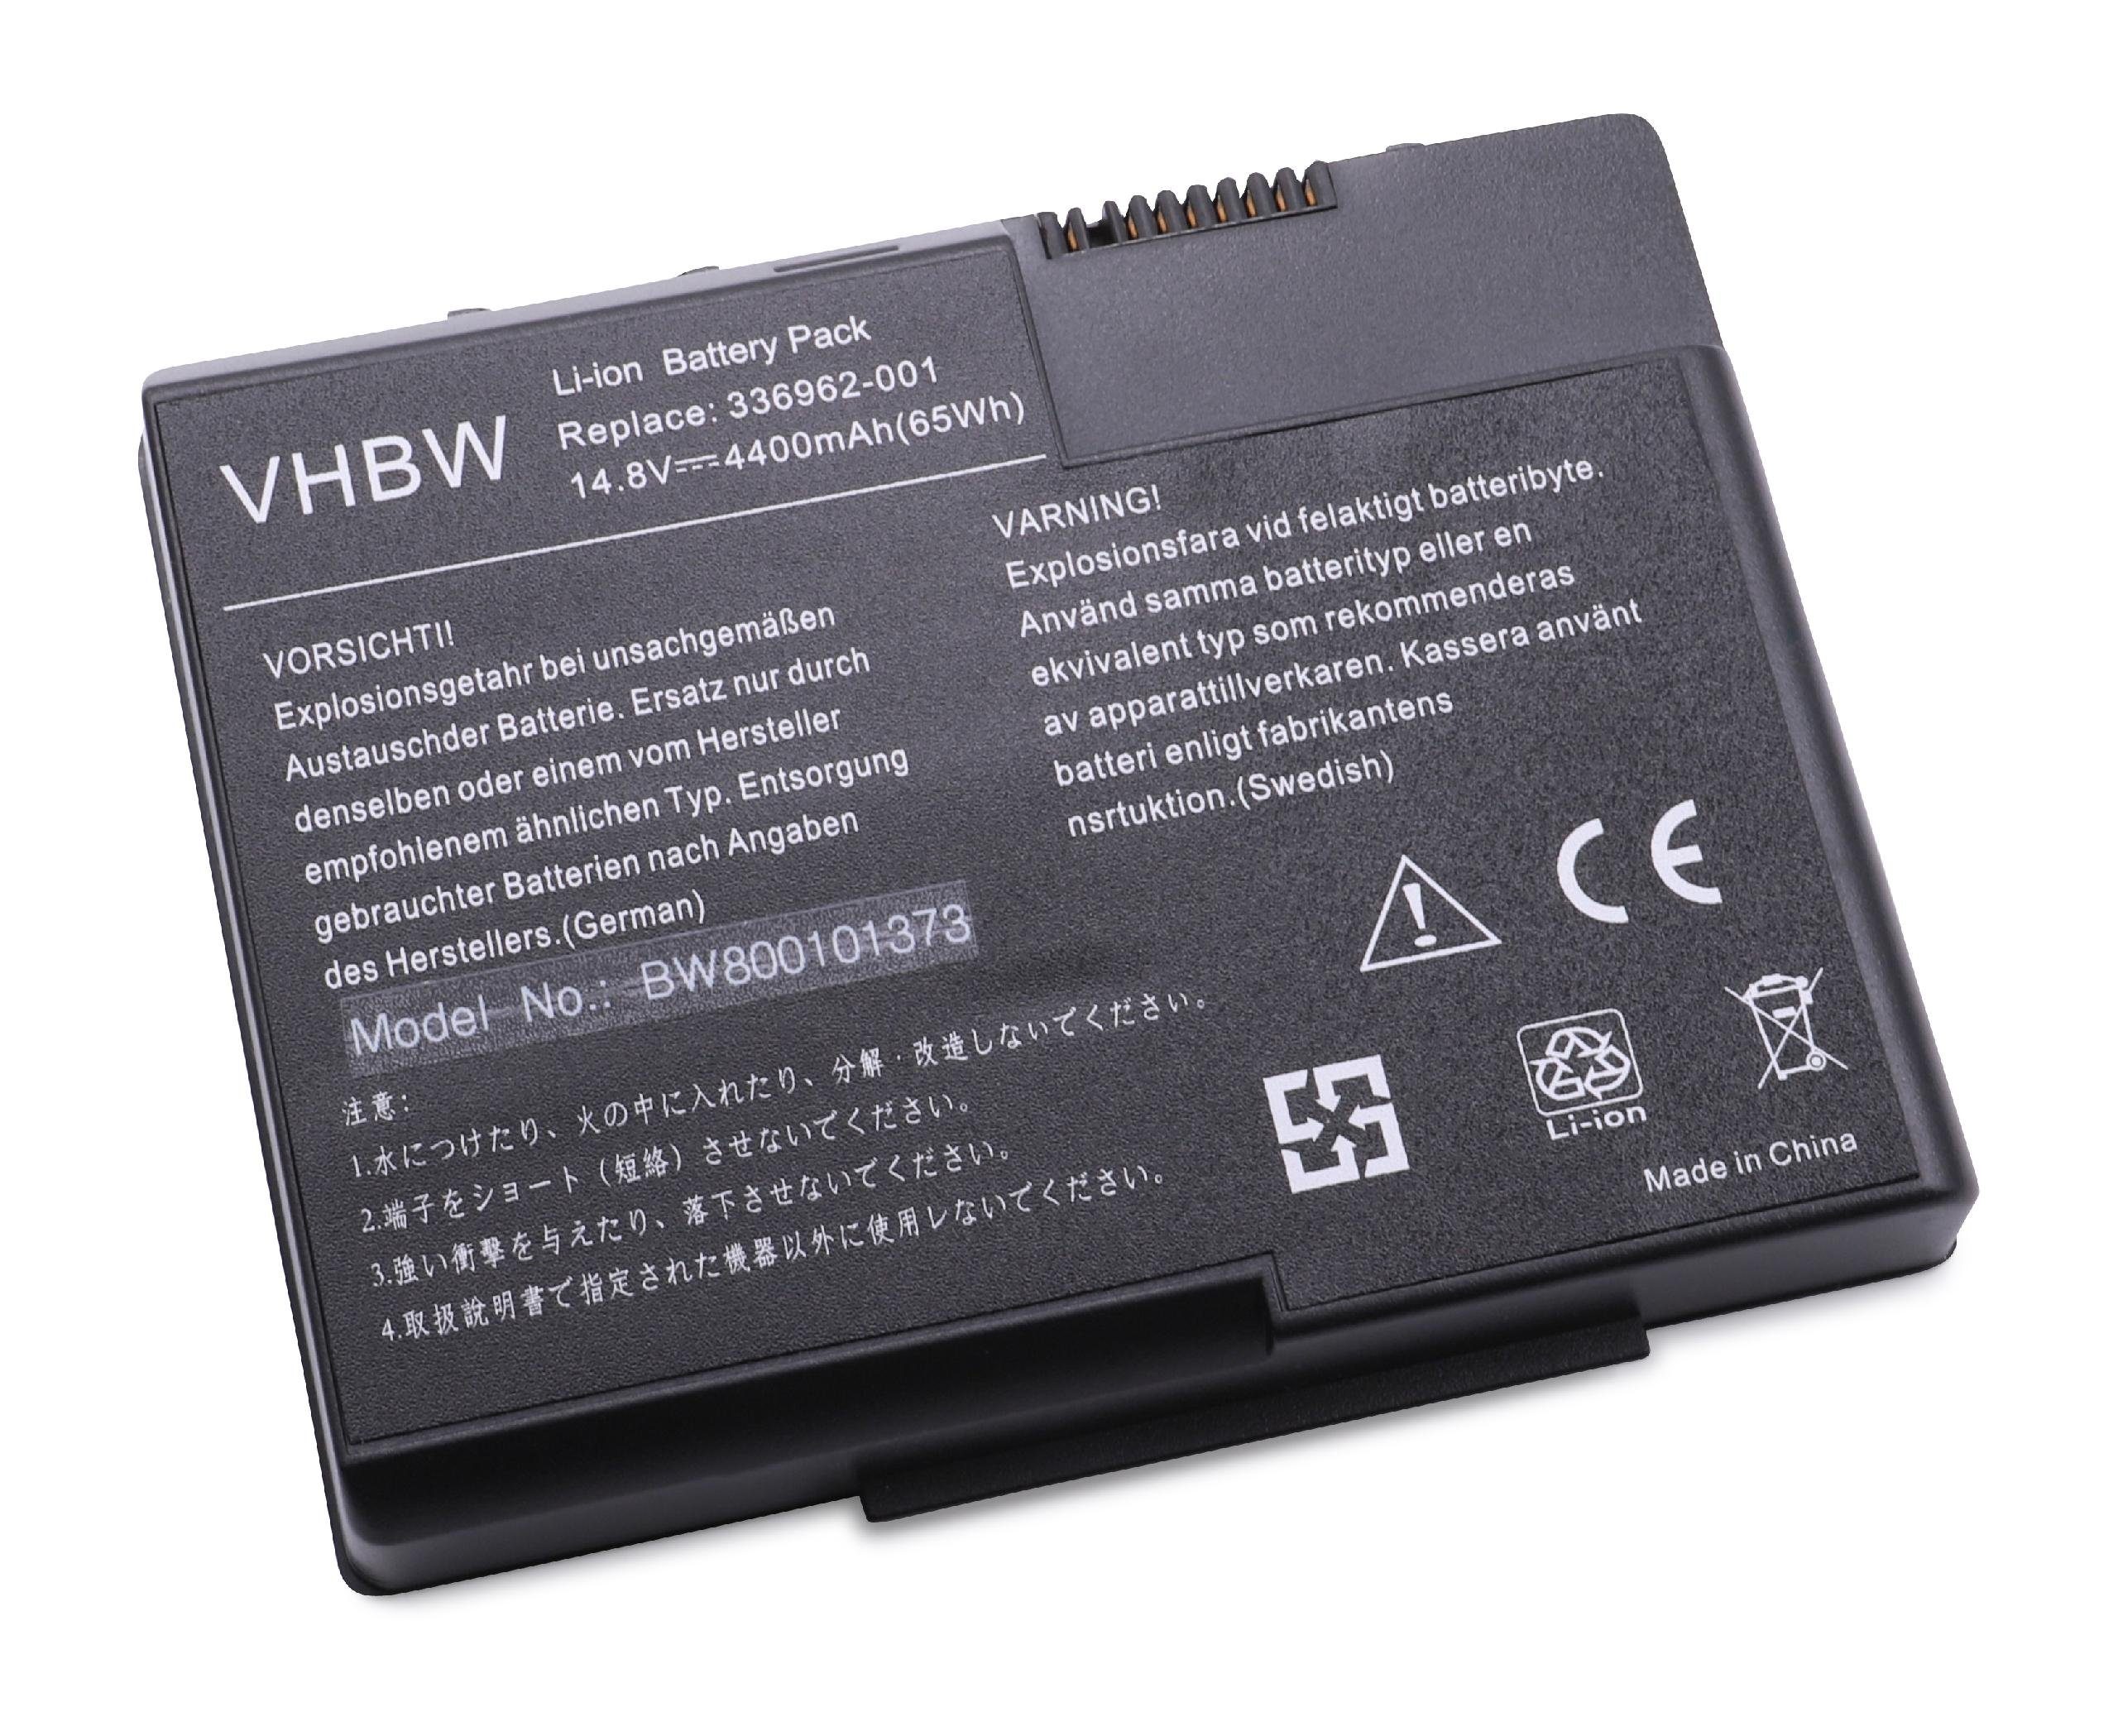 vhbw passend für HP Pavilion zt3349CL (PF084UA), zt3349CL (PF084UAR), Laptop-Akku 4400 mAh